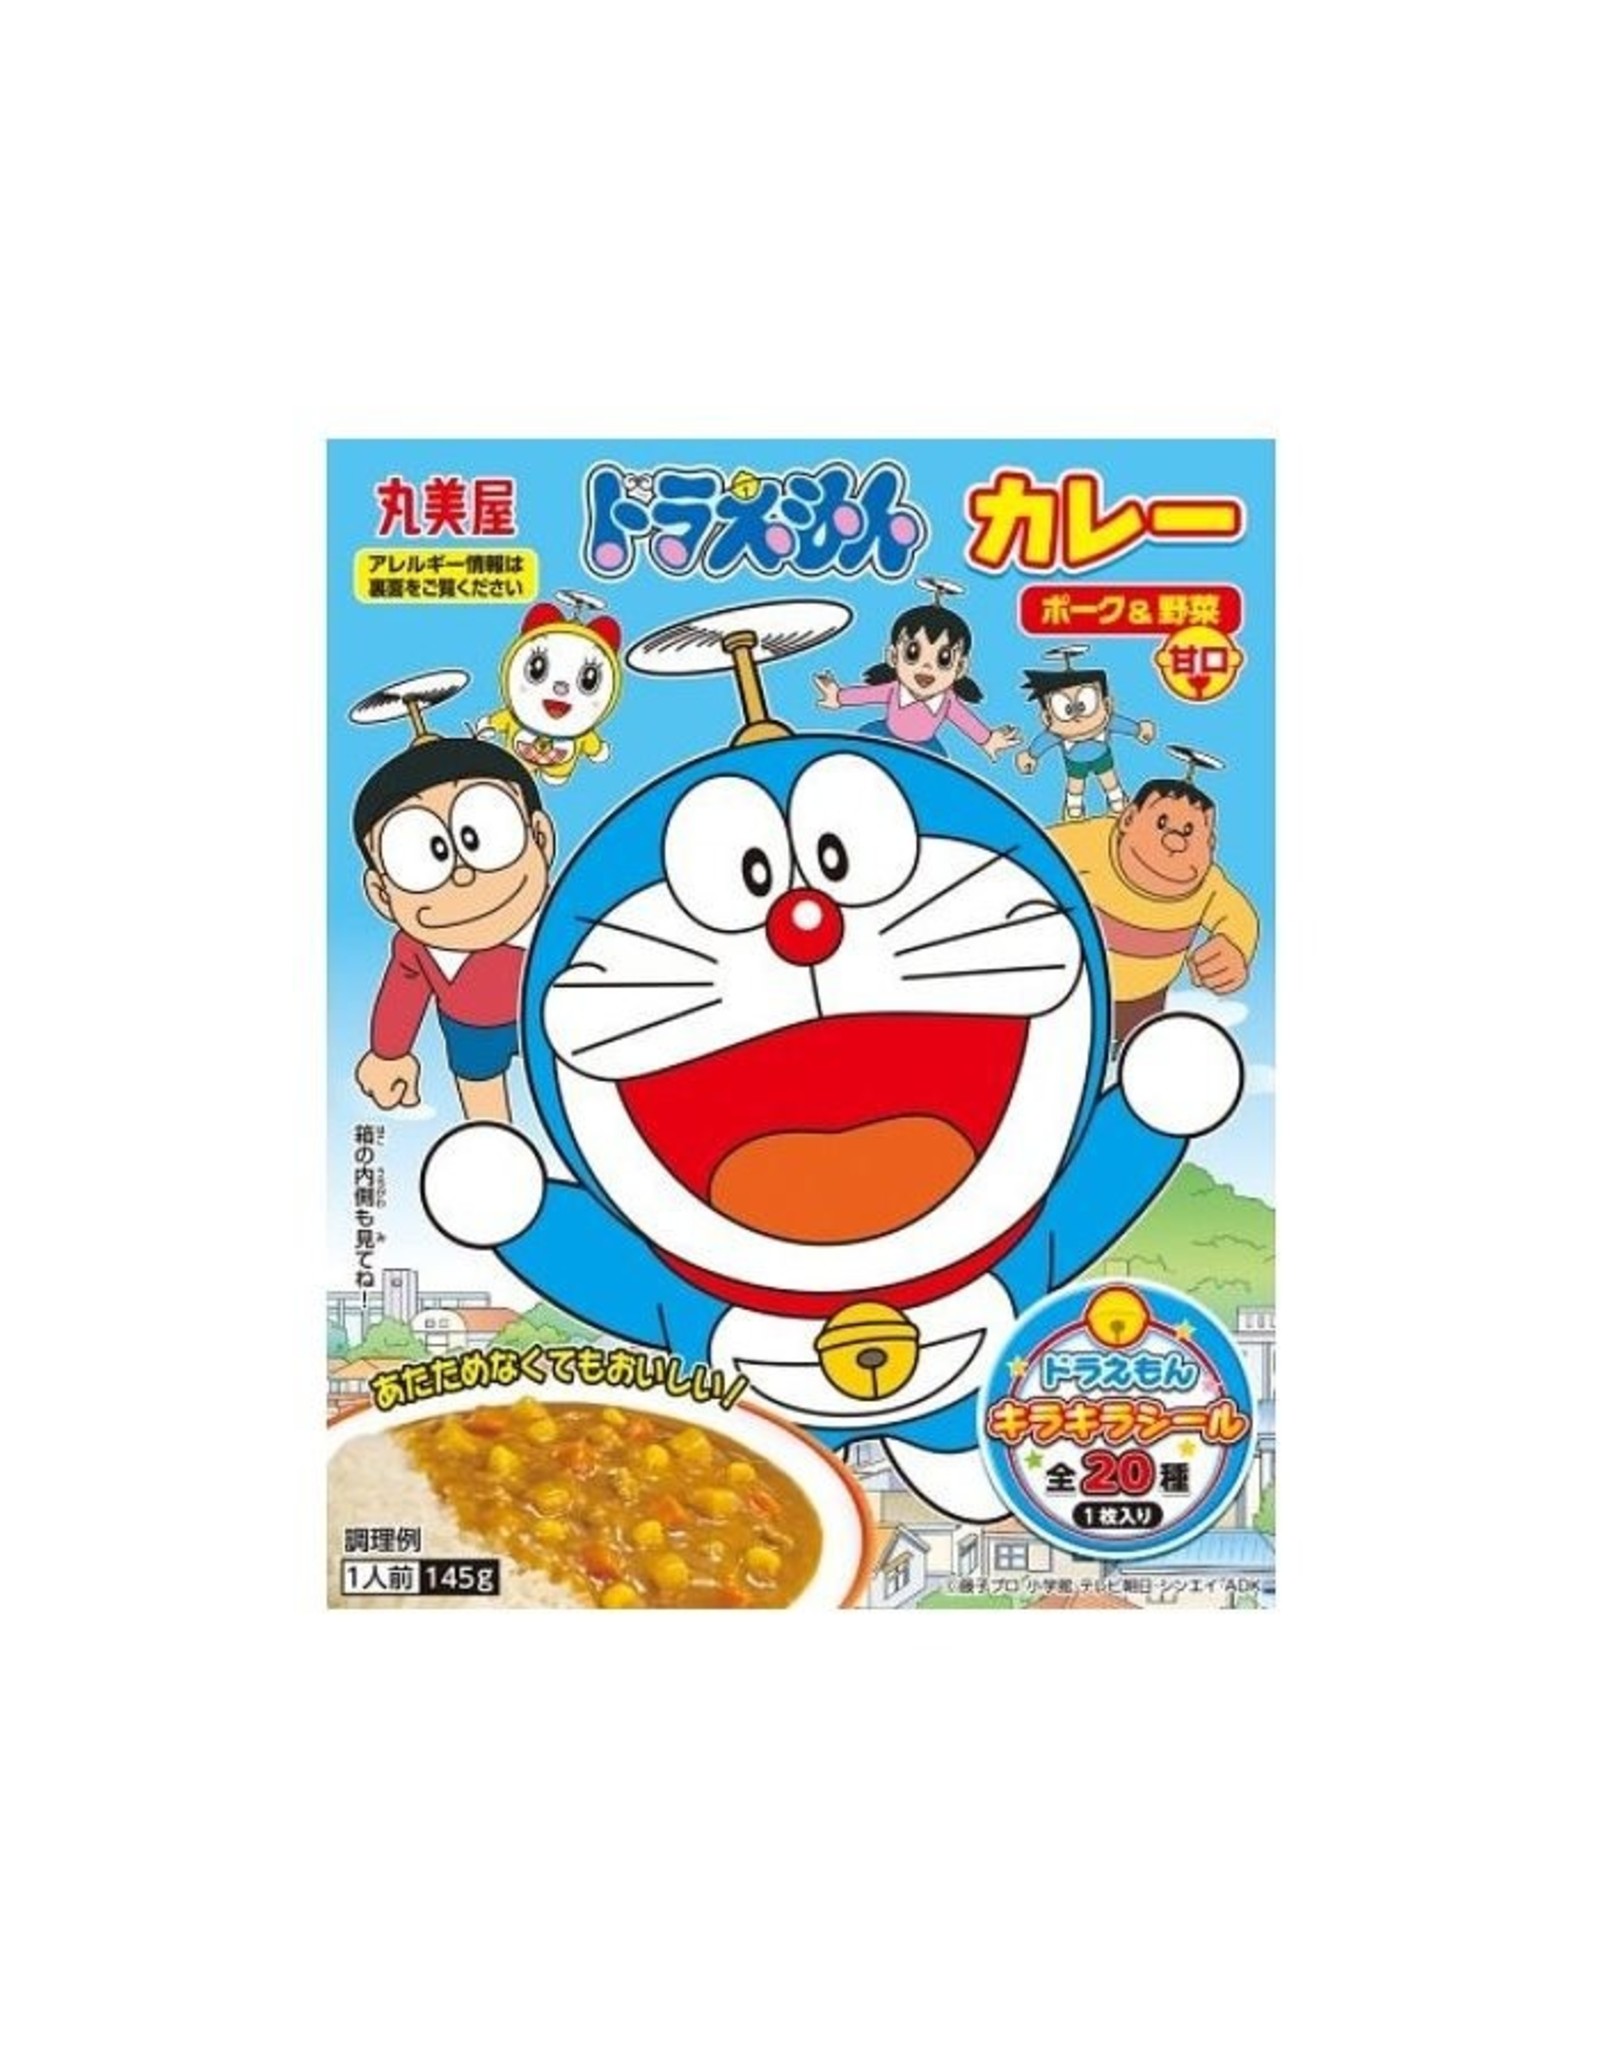 Doraemon Instant Curry - Pork & Vegetables